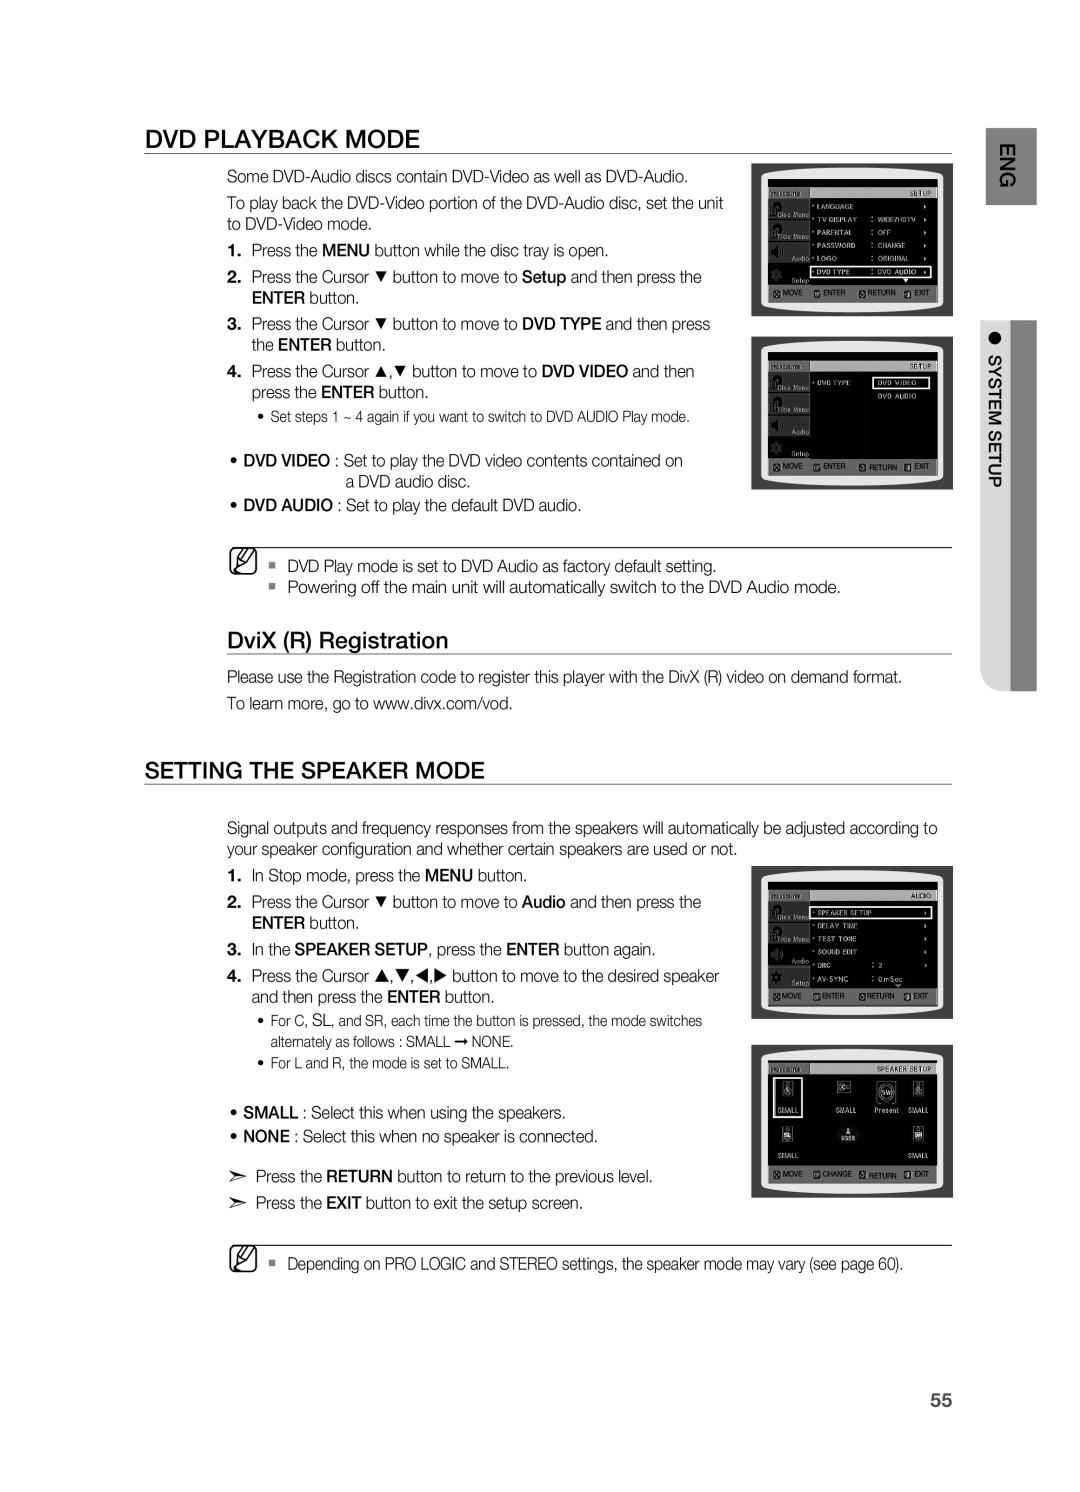 Samsung HT-Z310, HT-TZ312 manual DVD Playback Mode, DviX R Registration, Setting the Speaker Mode 